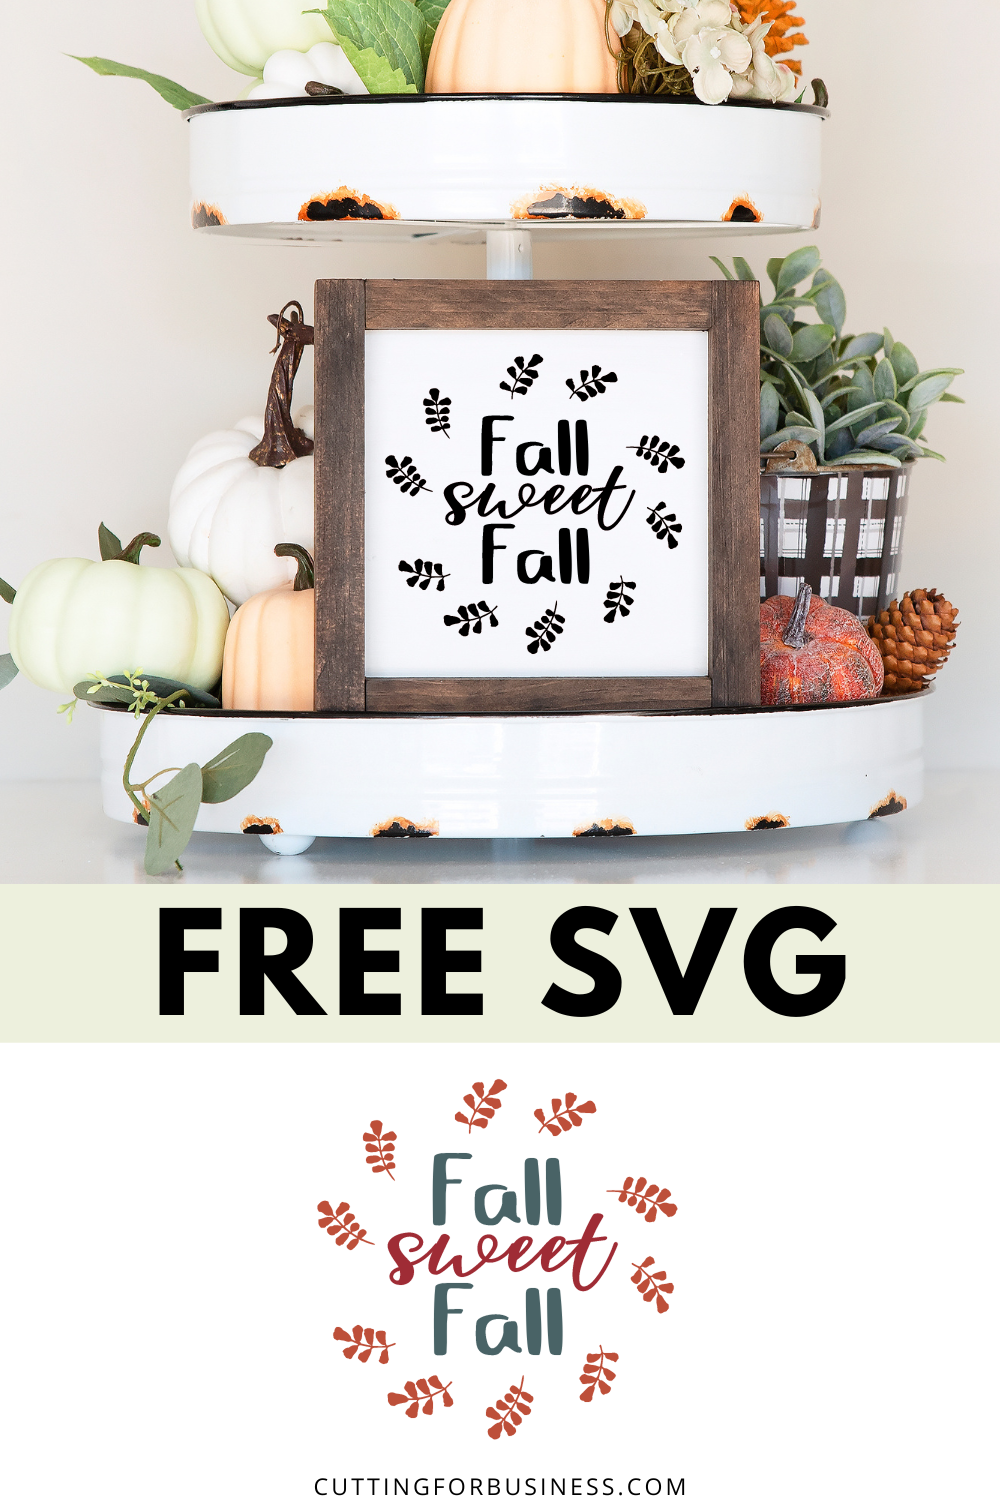 Fall Sweet Fall Wreath SVG - cuttingforbusiness.com.